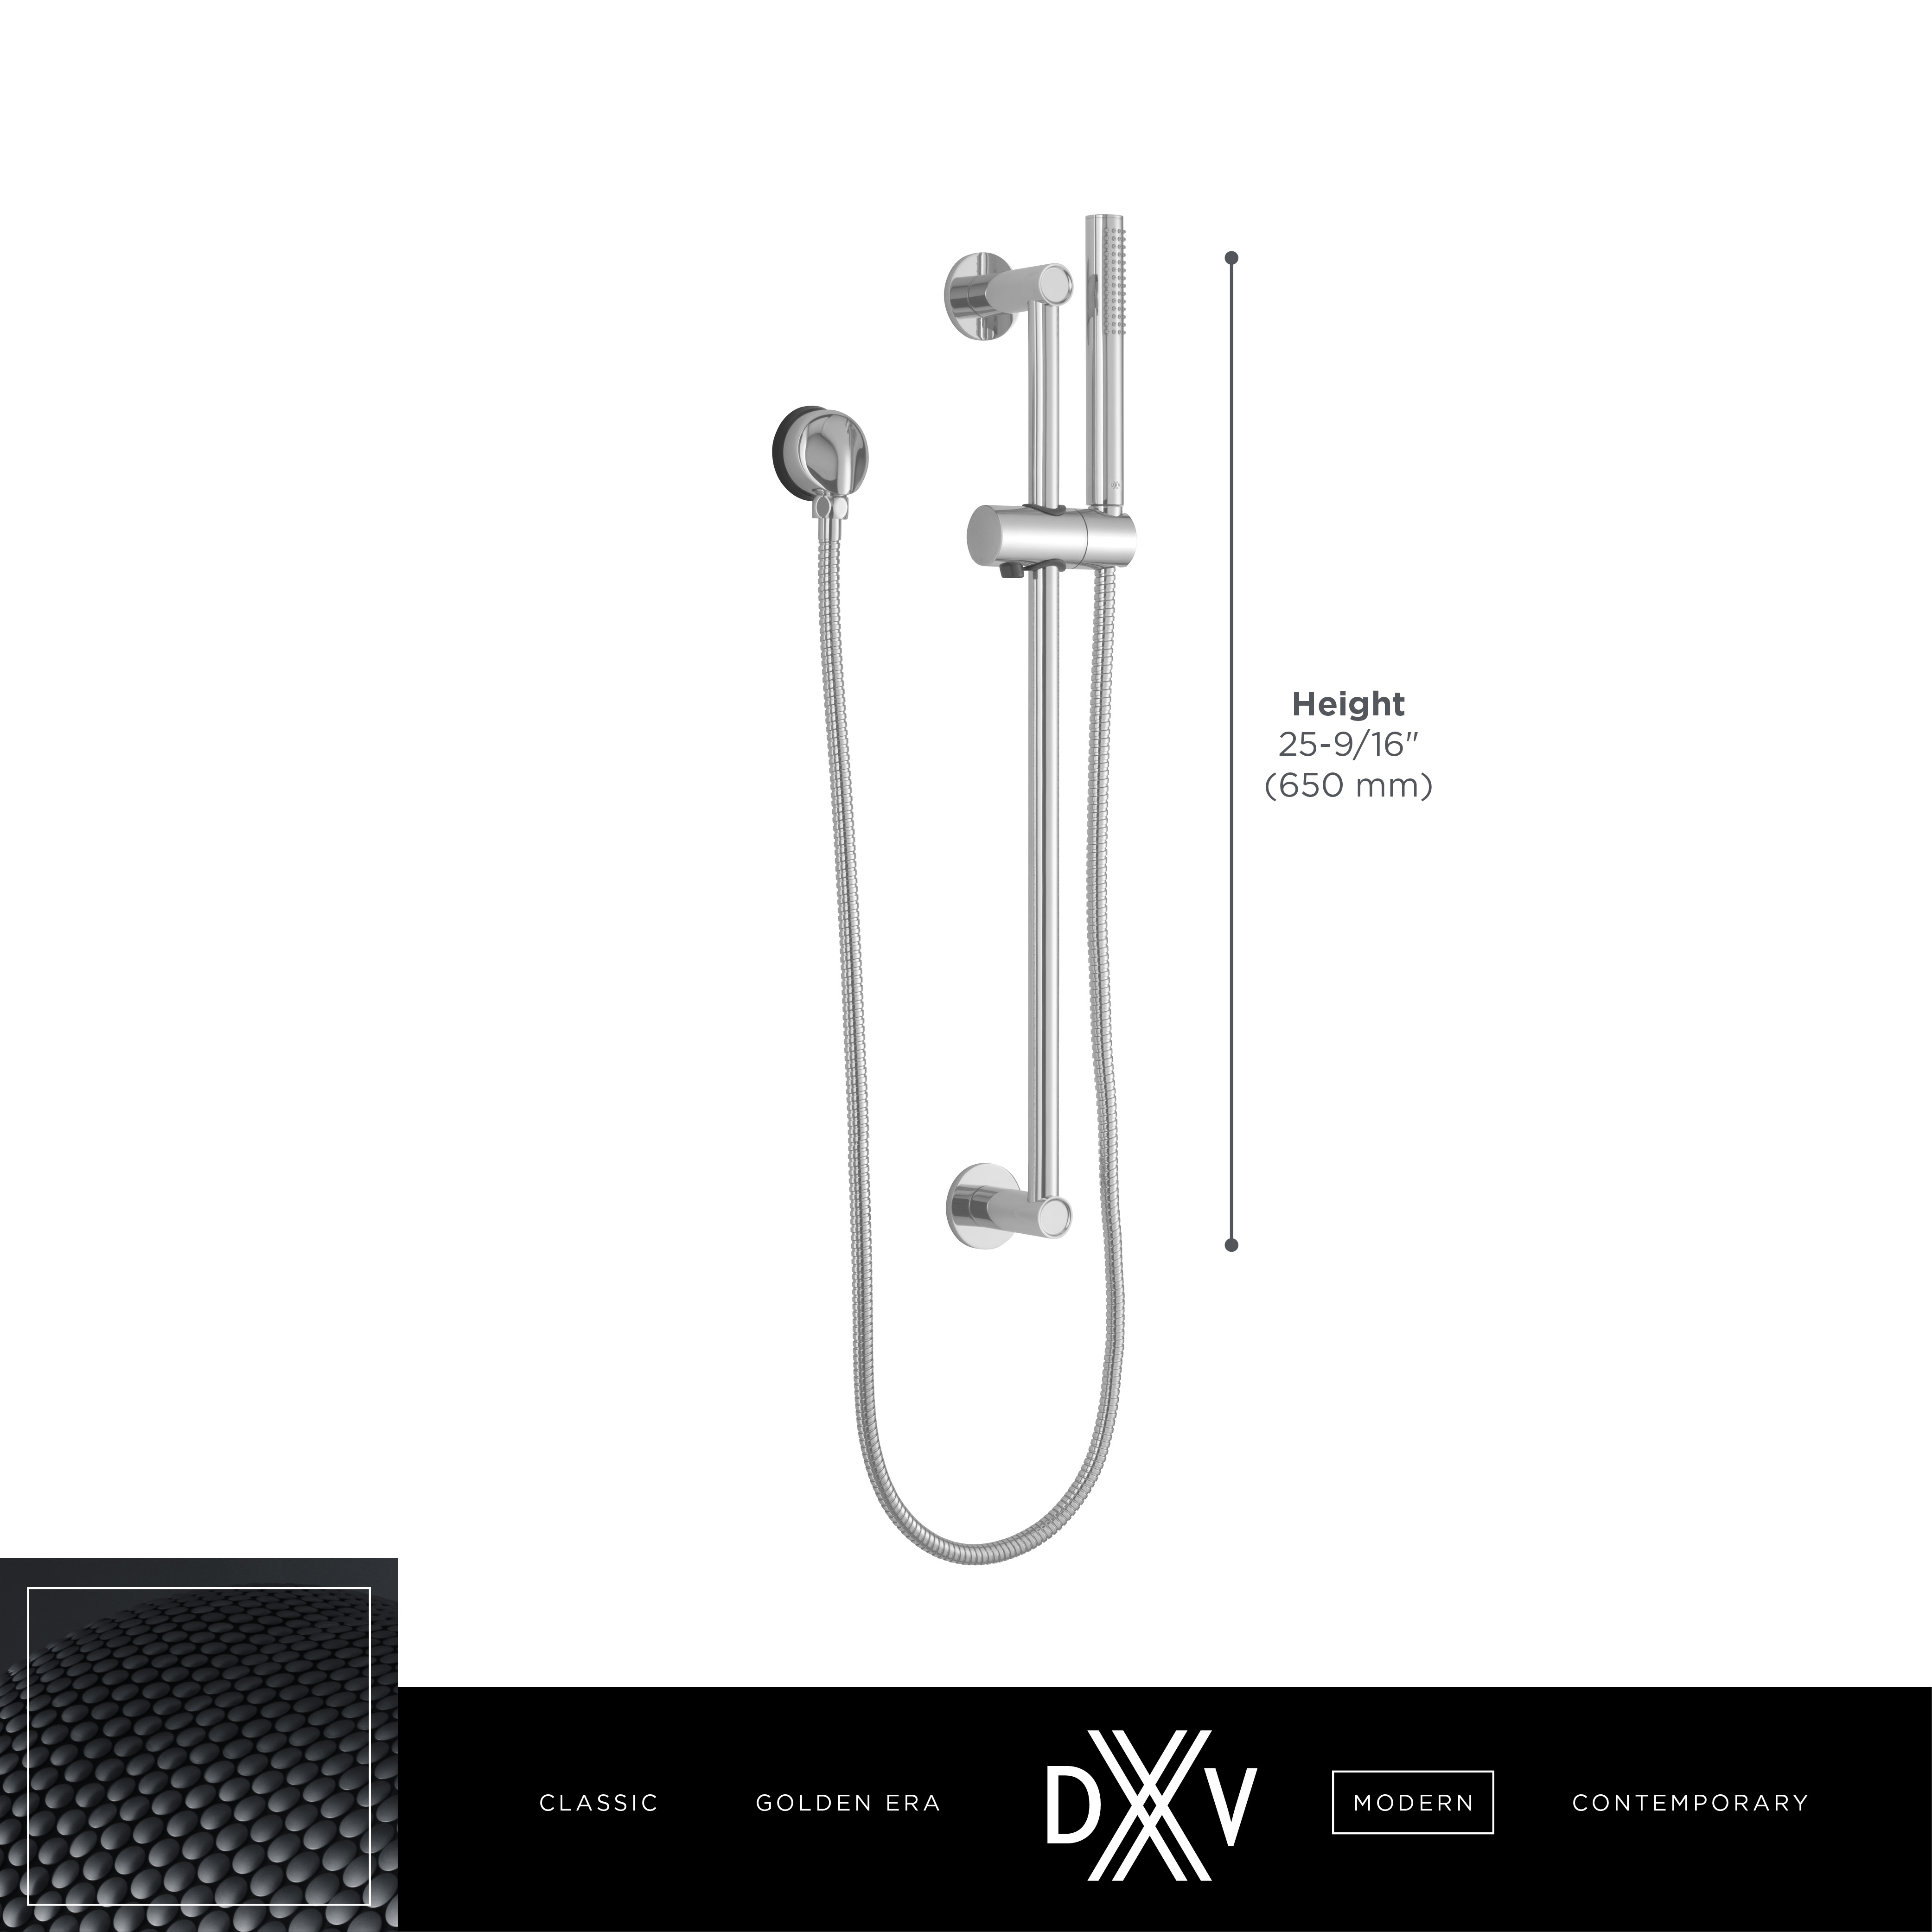 DXV Modulus Personal Hand Shower Set with Adjustable 24 in. Slide Bar